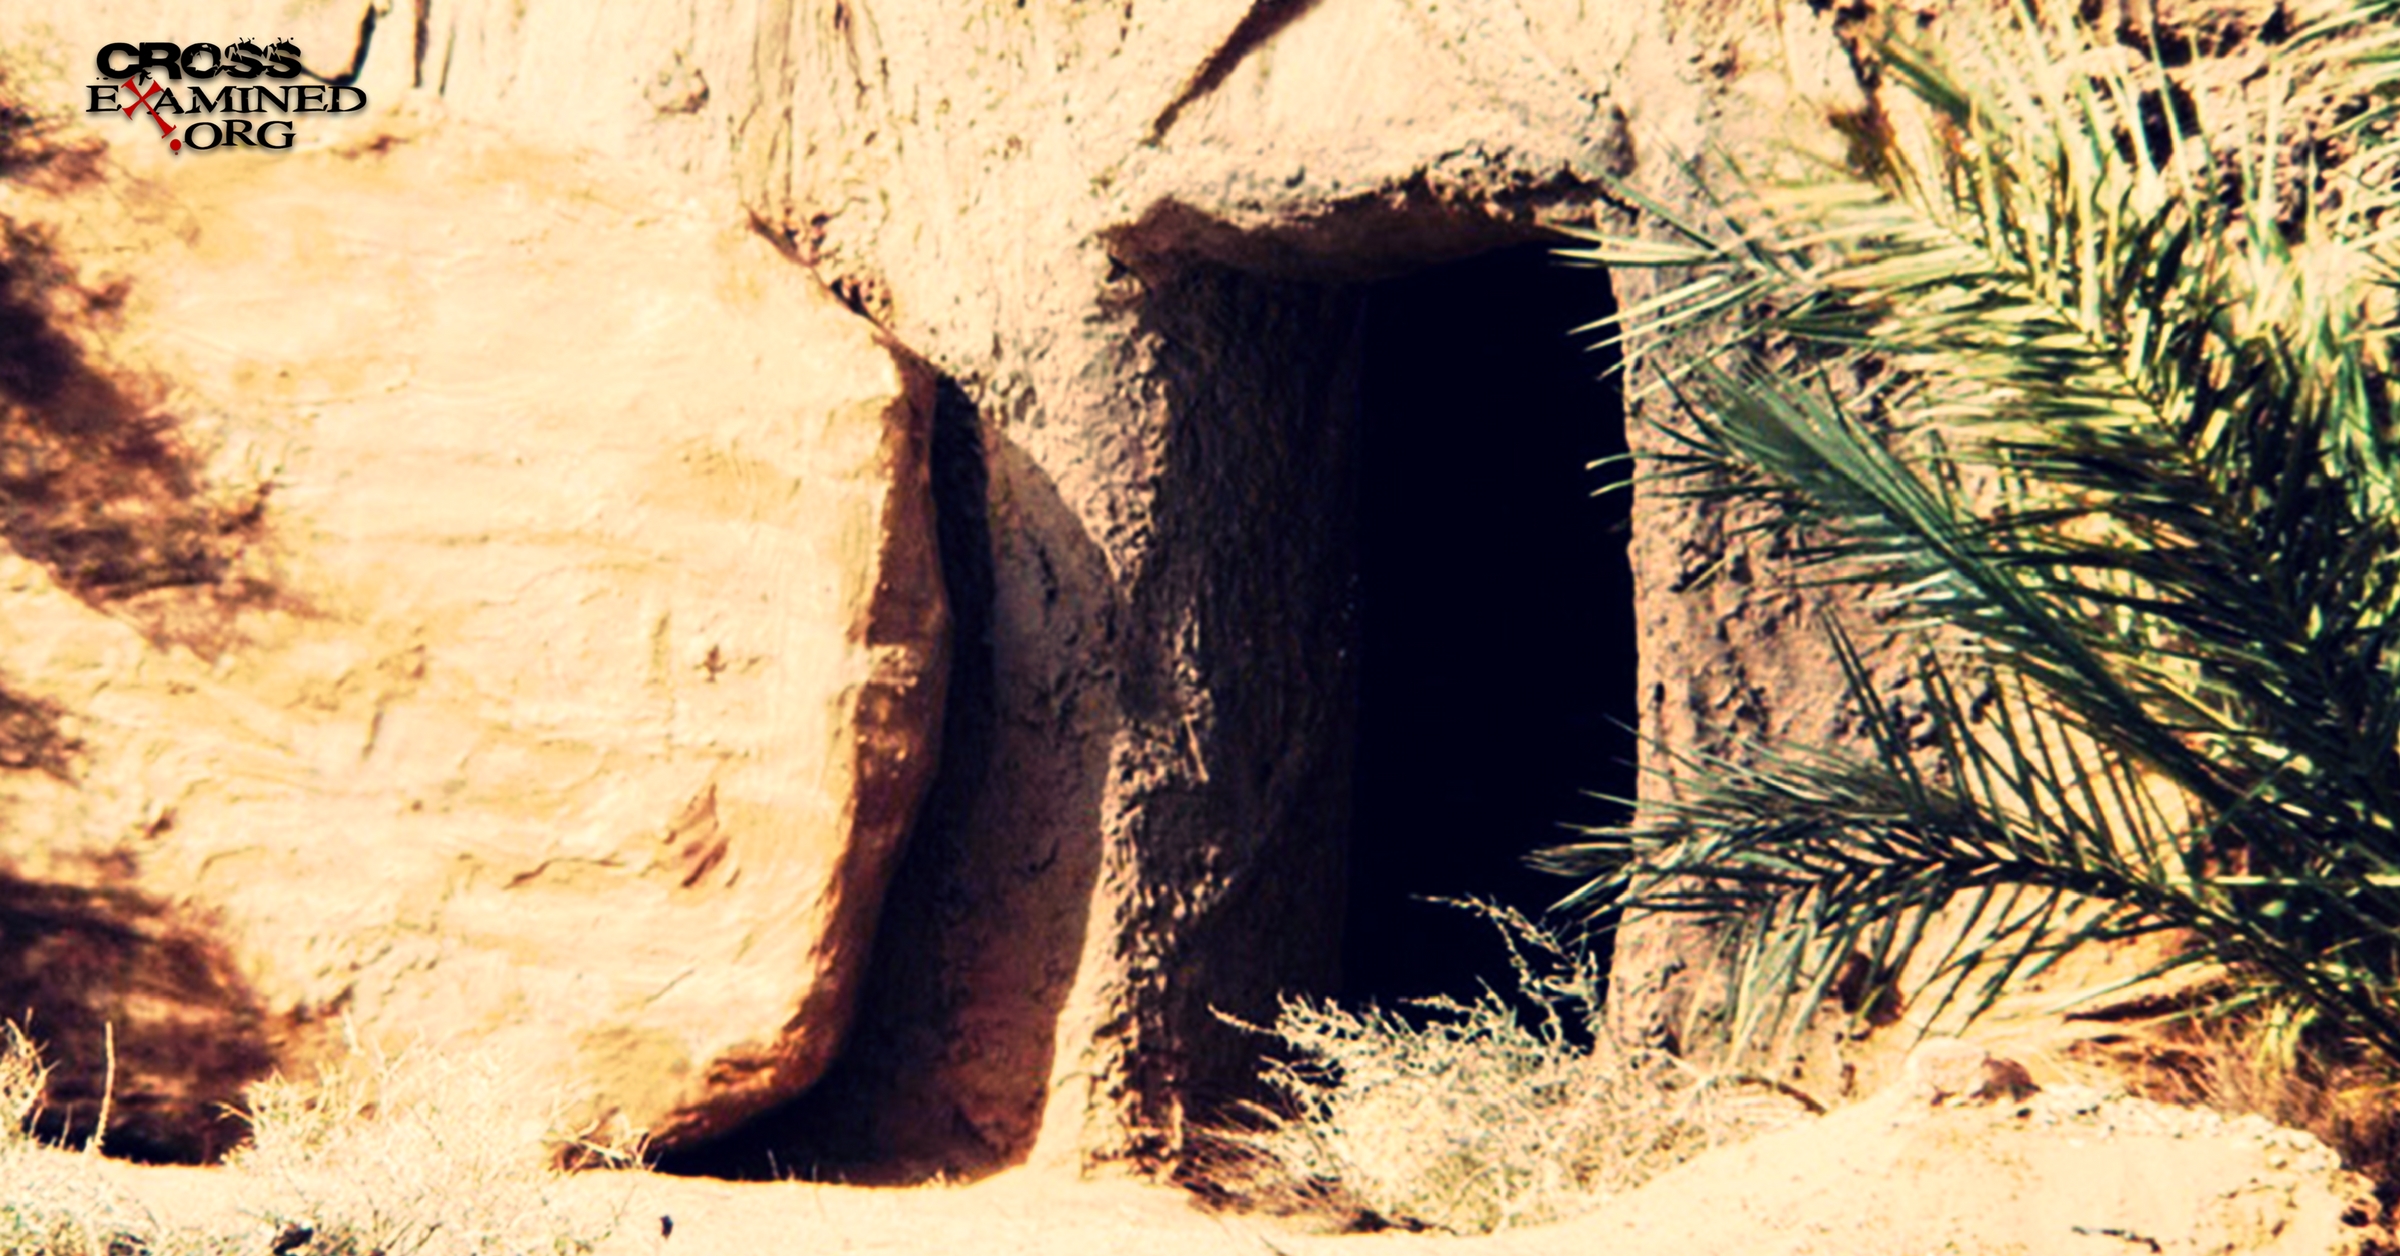 A Quick Case For Jesus’ Resurrection